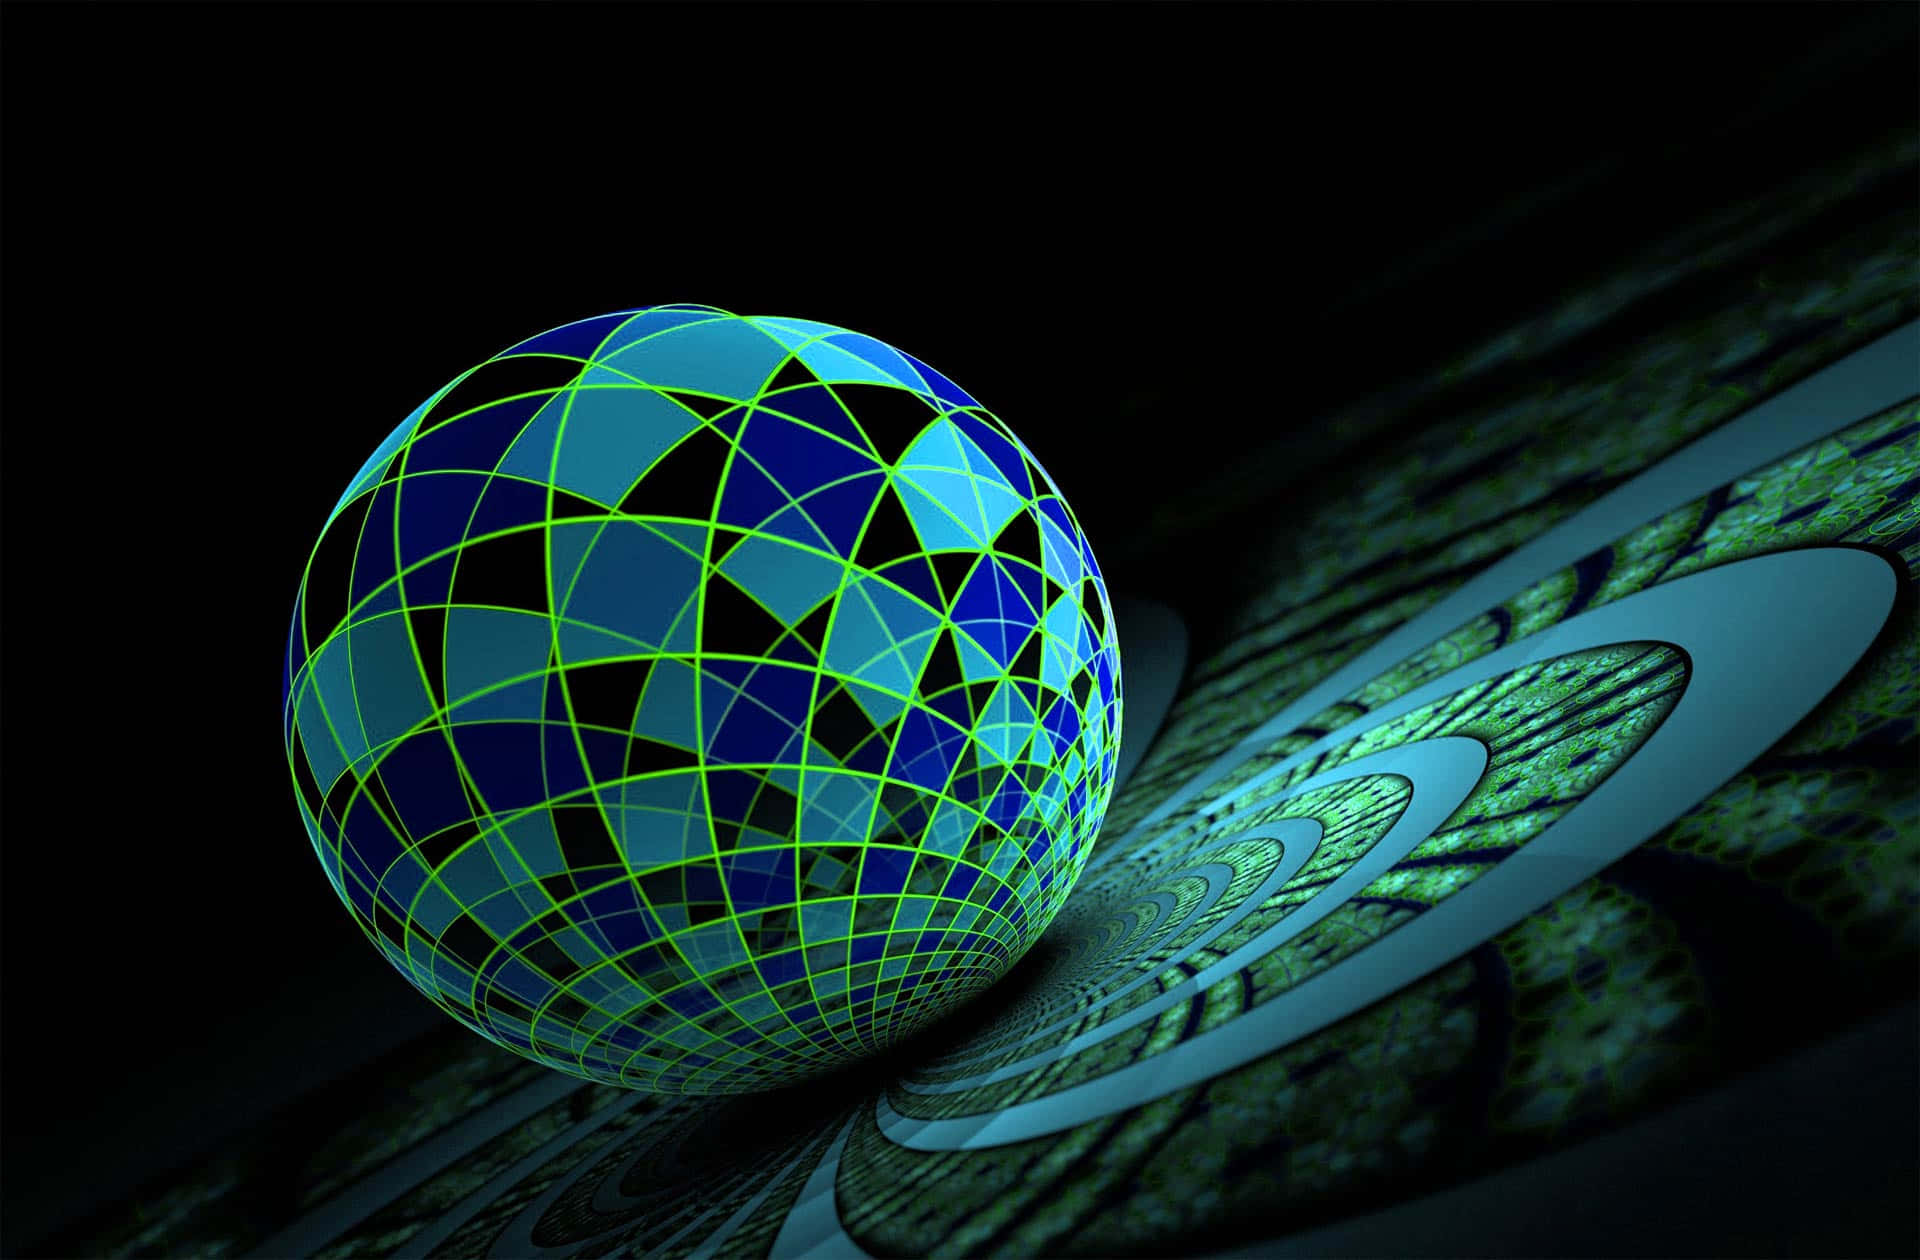 3d Sphere With Geometric Patterns Fondos De Pantalla Picture